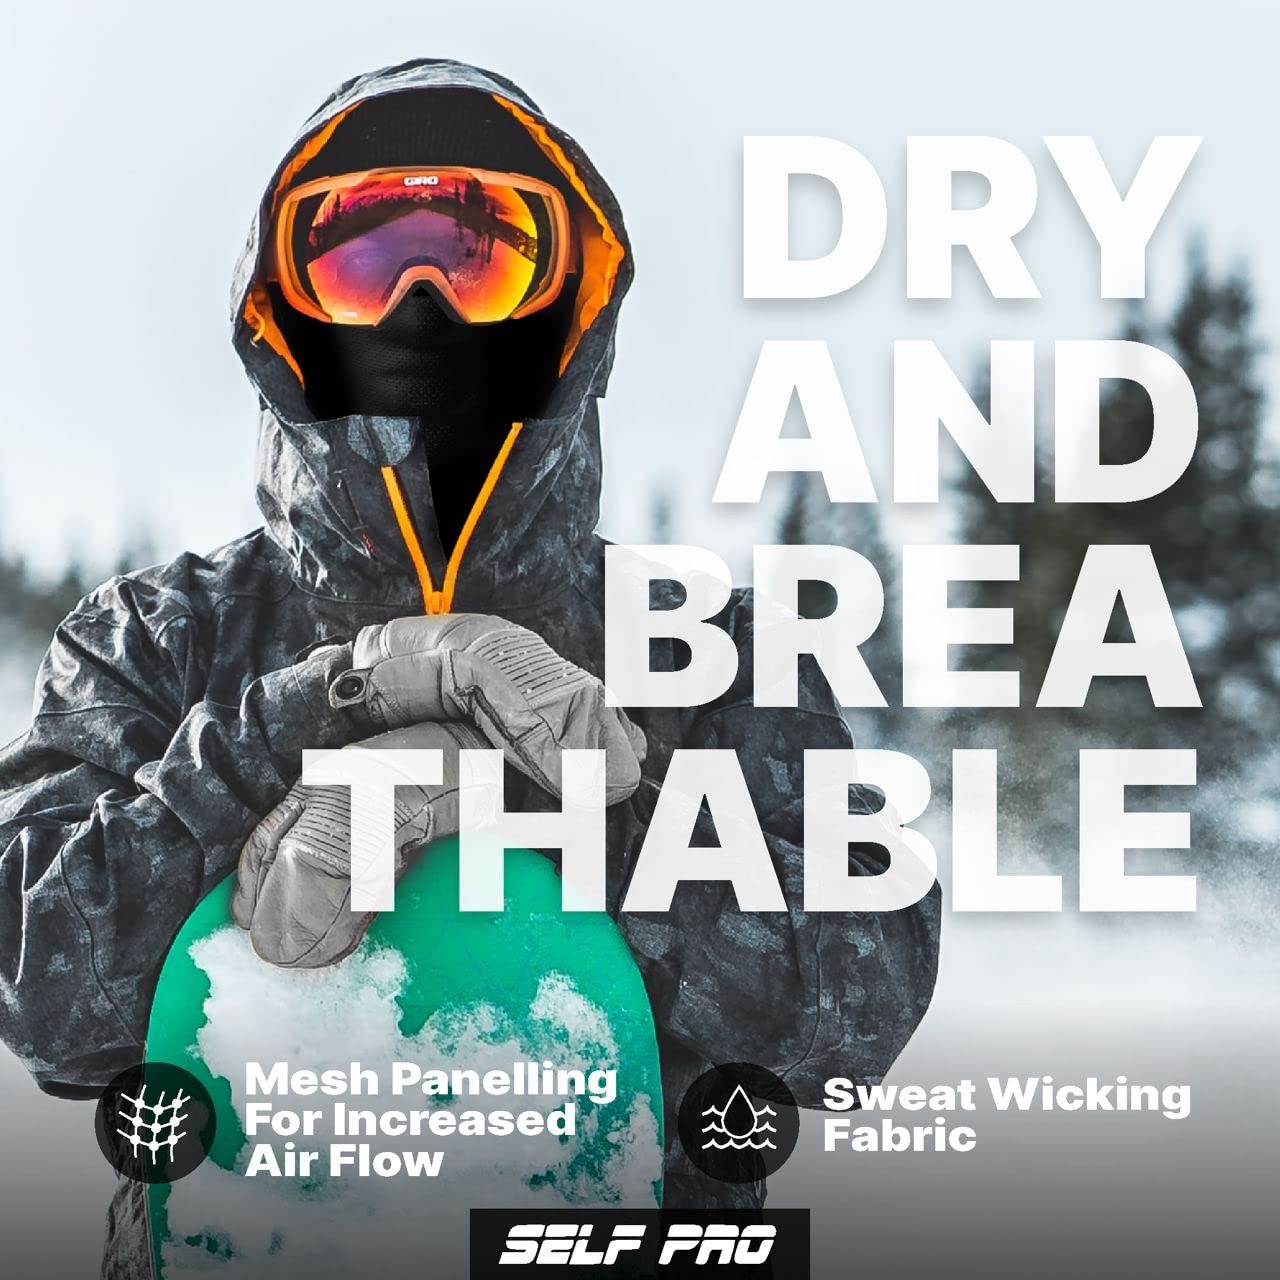 Ski Mask for Men Women Balaclava Windproof Cold Weather Full Face Masks Neck Warmer or Tactical Balaclava